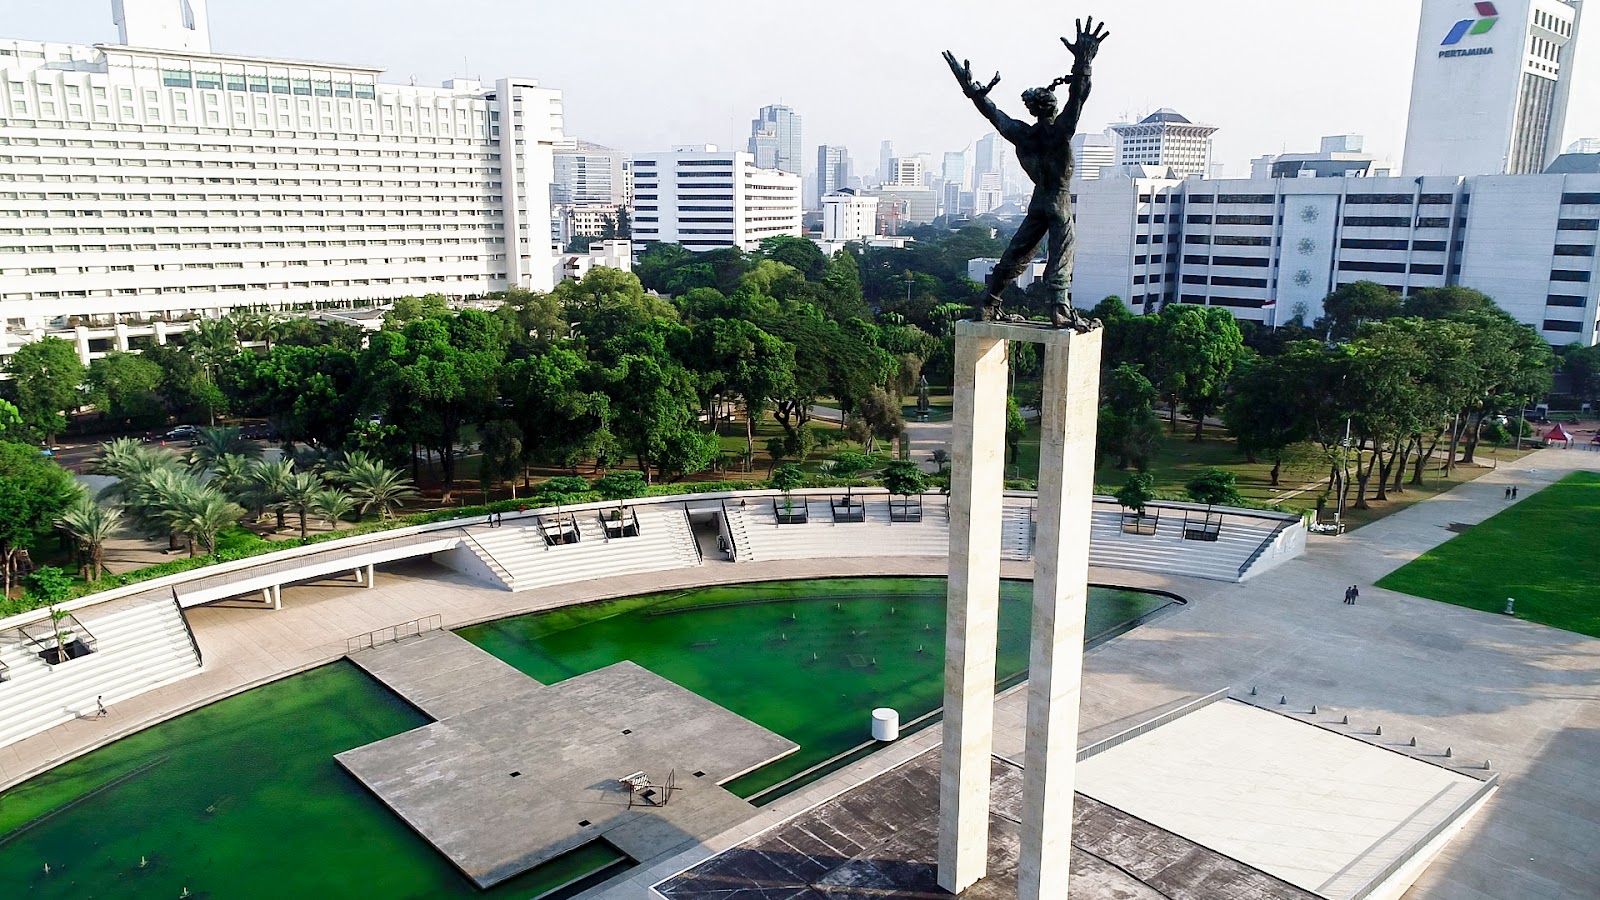 Taman Lapangan Banteng. Source: Jakarta Smart City